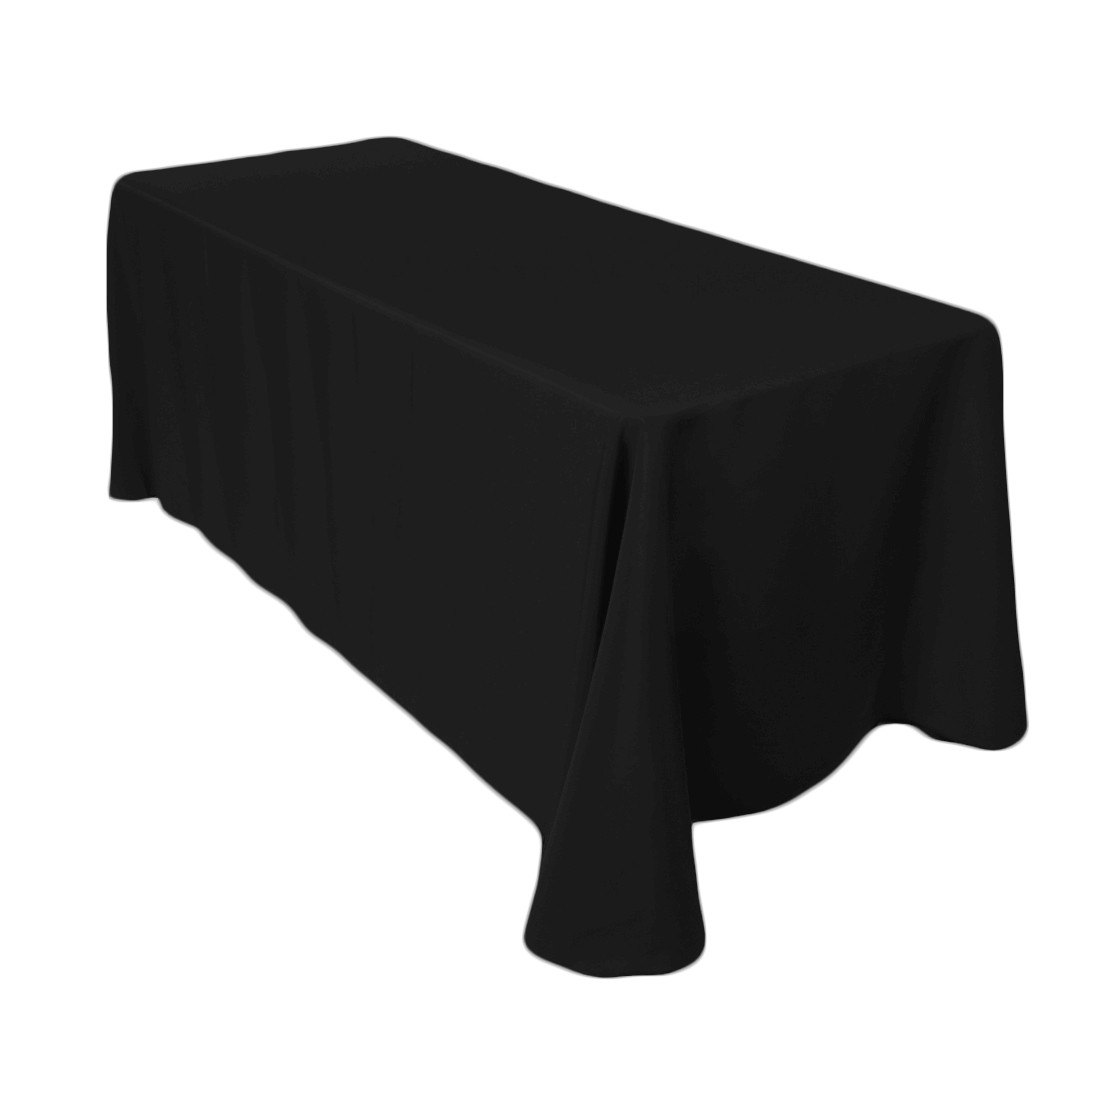 8 ft Polyester Black Table Drape